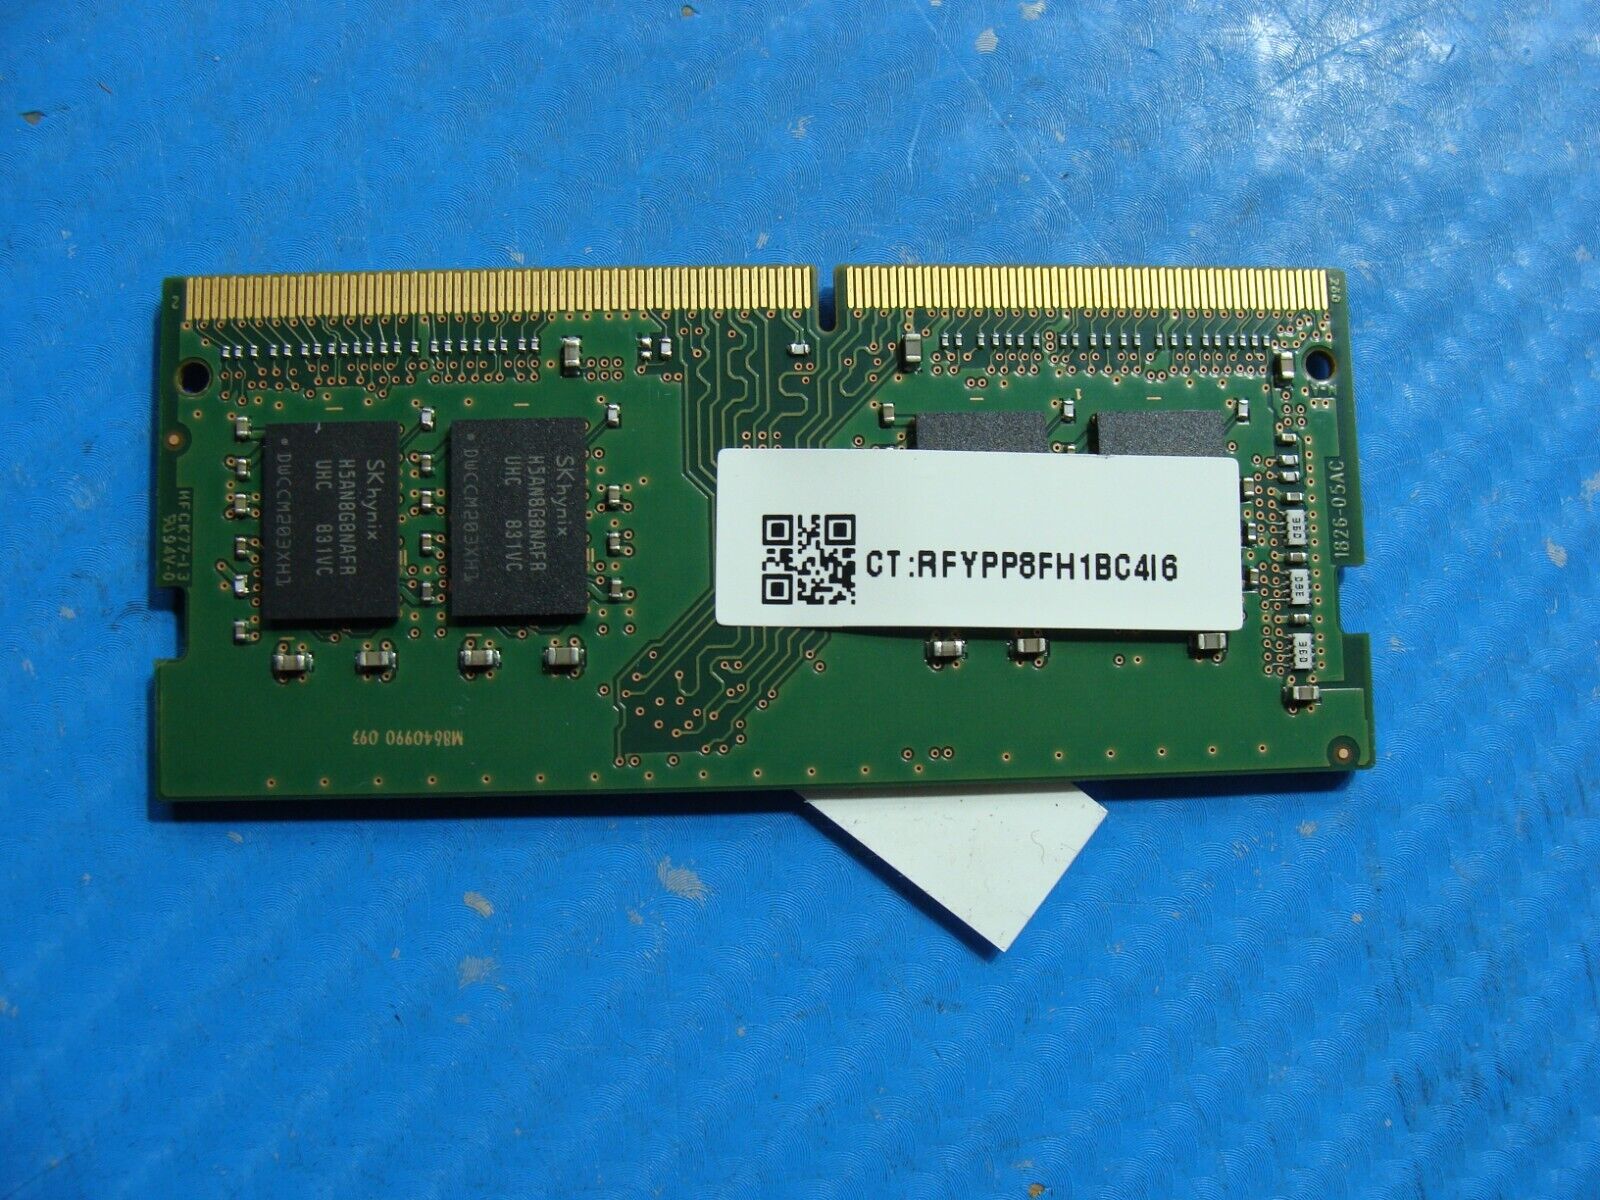 HP 15-cs0053cl SK Hynix 8GB 1Rx8 PC4-2400T Memory RAM SO-DIMM HMA81GS6AFR8N-UH